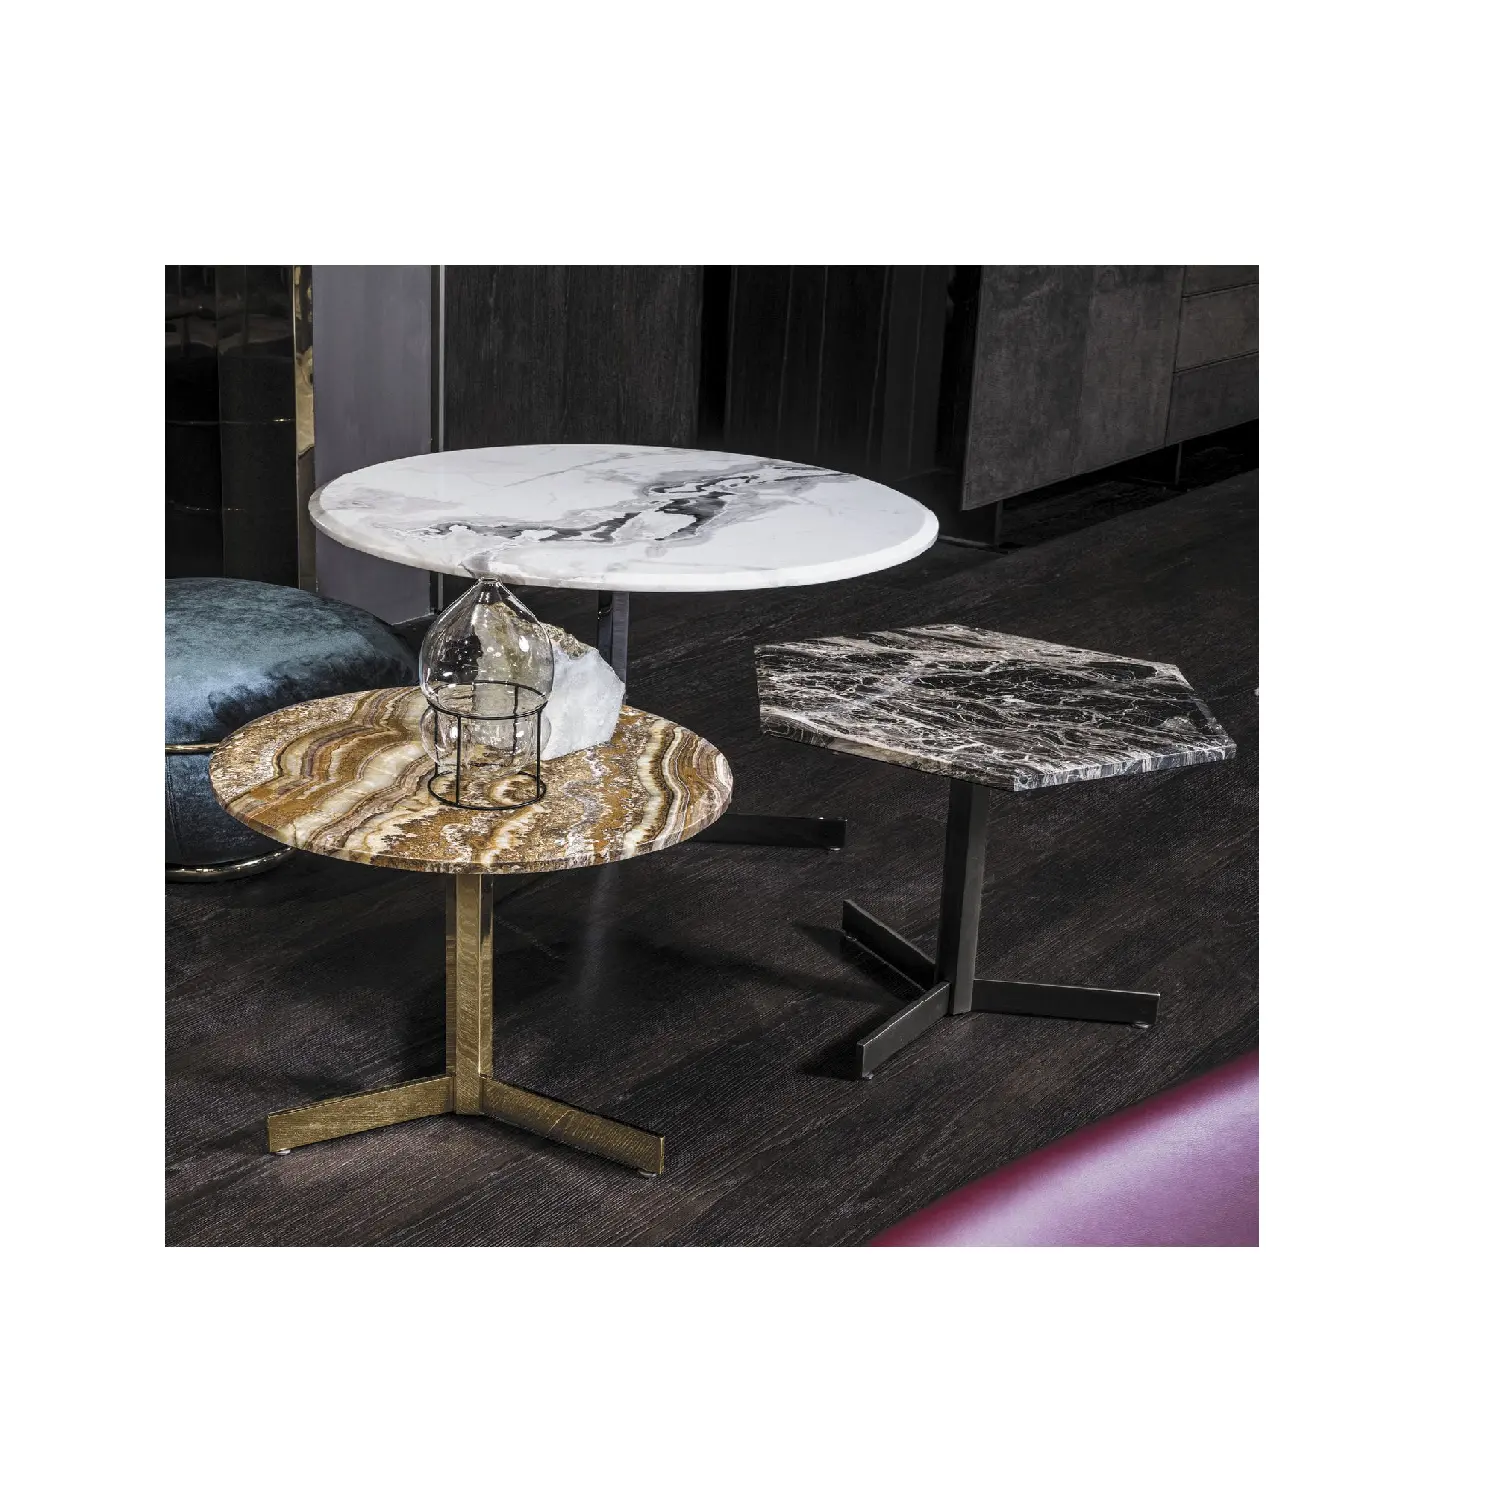 Pirinç parlak taban mermer masa restoran Bistro kare yemek masası sehpa mobilya satış ürünü